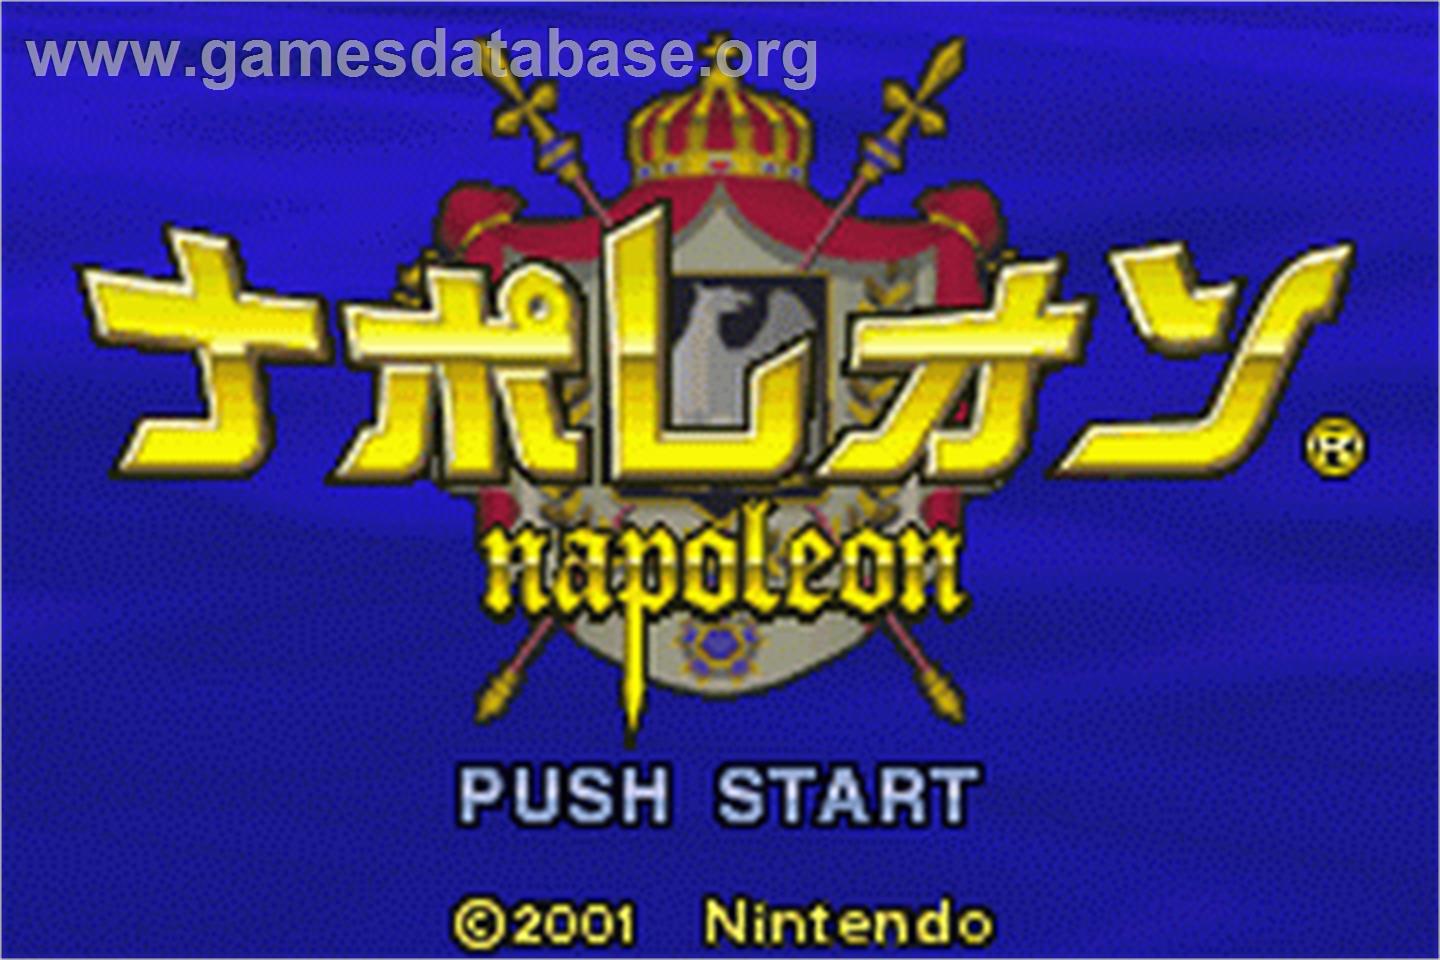 Manhole-e - Nintendo Game Boy Advance - Artwork - Title Screen